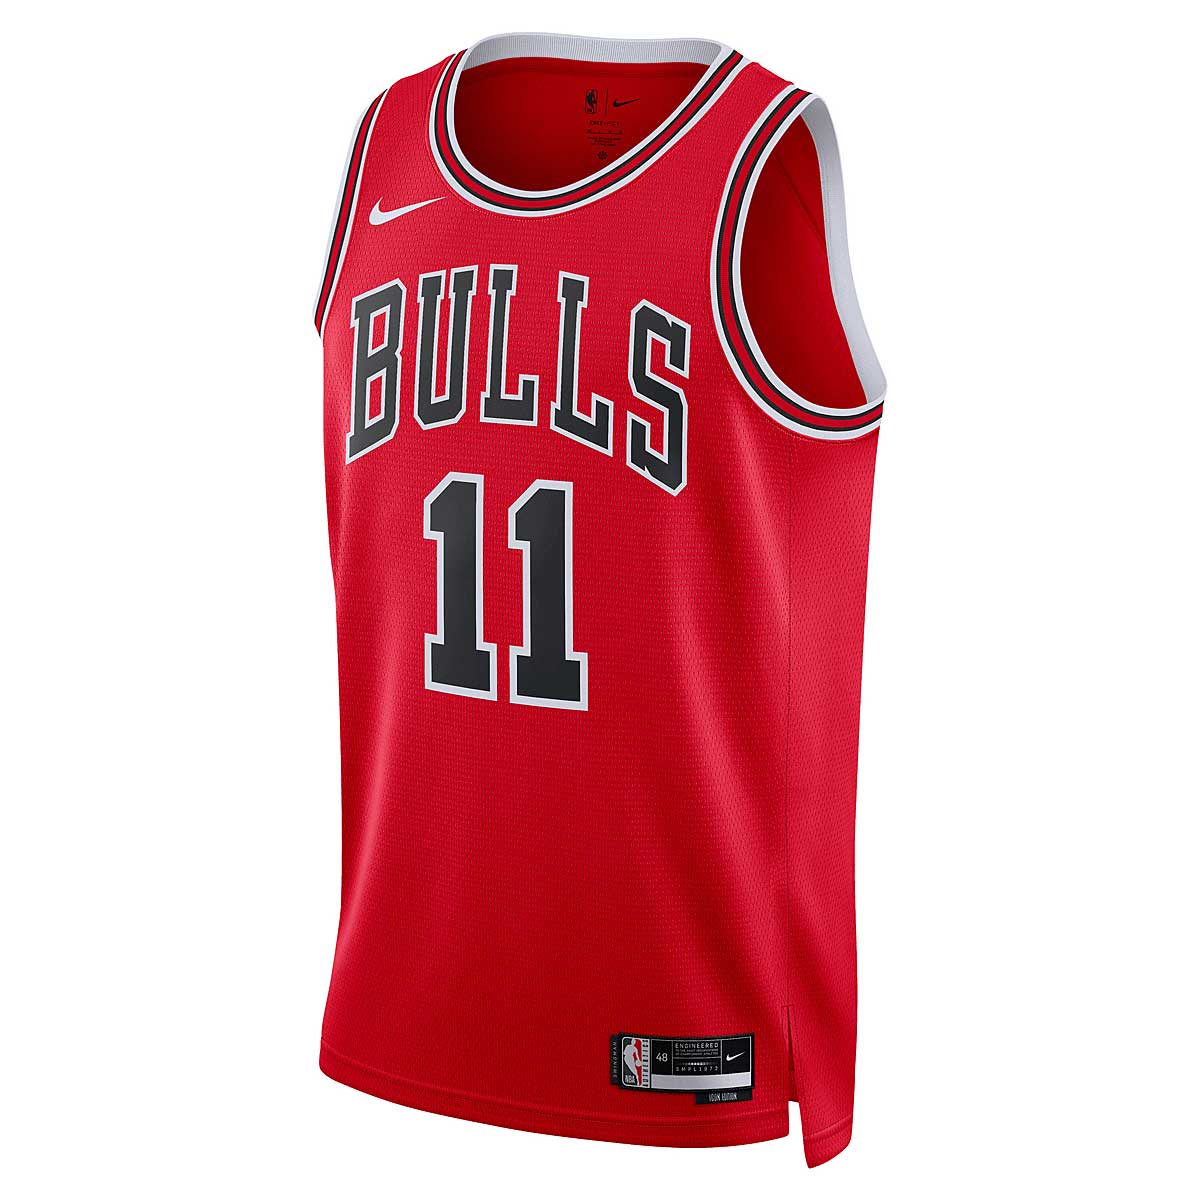 Nike NBA Chicago Bulls Dri-fit Icon Swingman Jersey Demar Derozan, University Rot/derozan Demar S